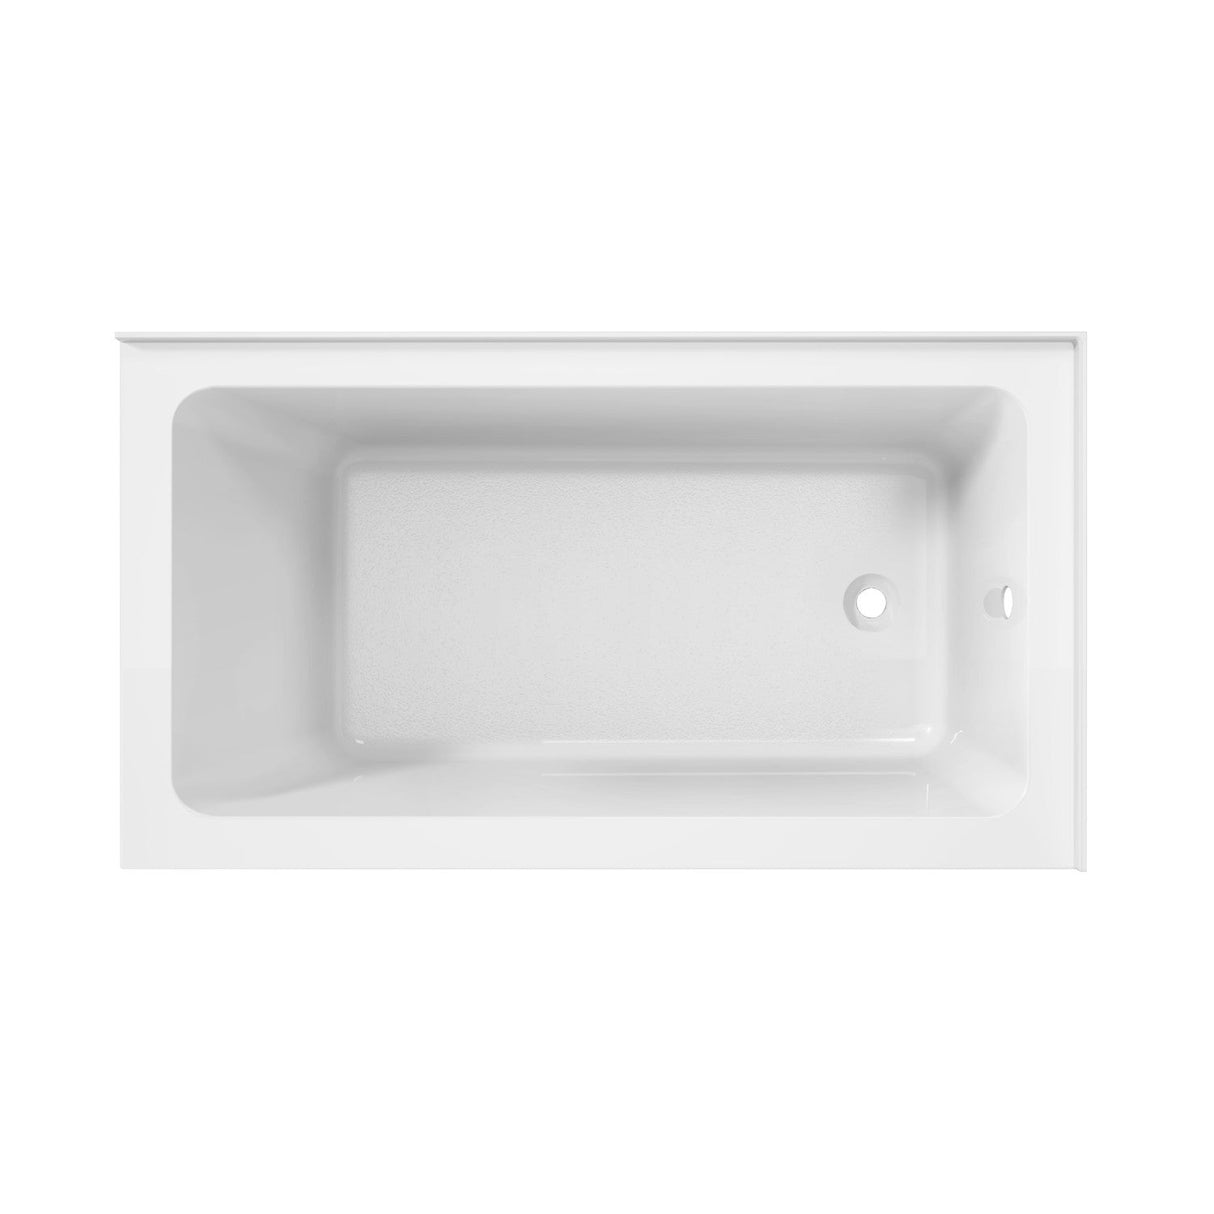 Aqua Eden VTAP5430R22TS 54-Inch Acrylic 2-Wall Corner Alcove Tub with Right Hand Drain Hole, White